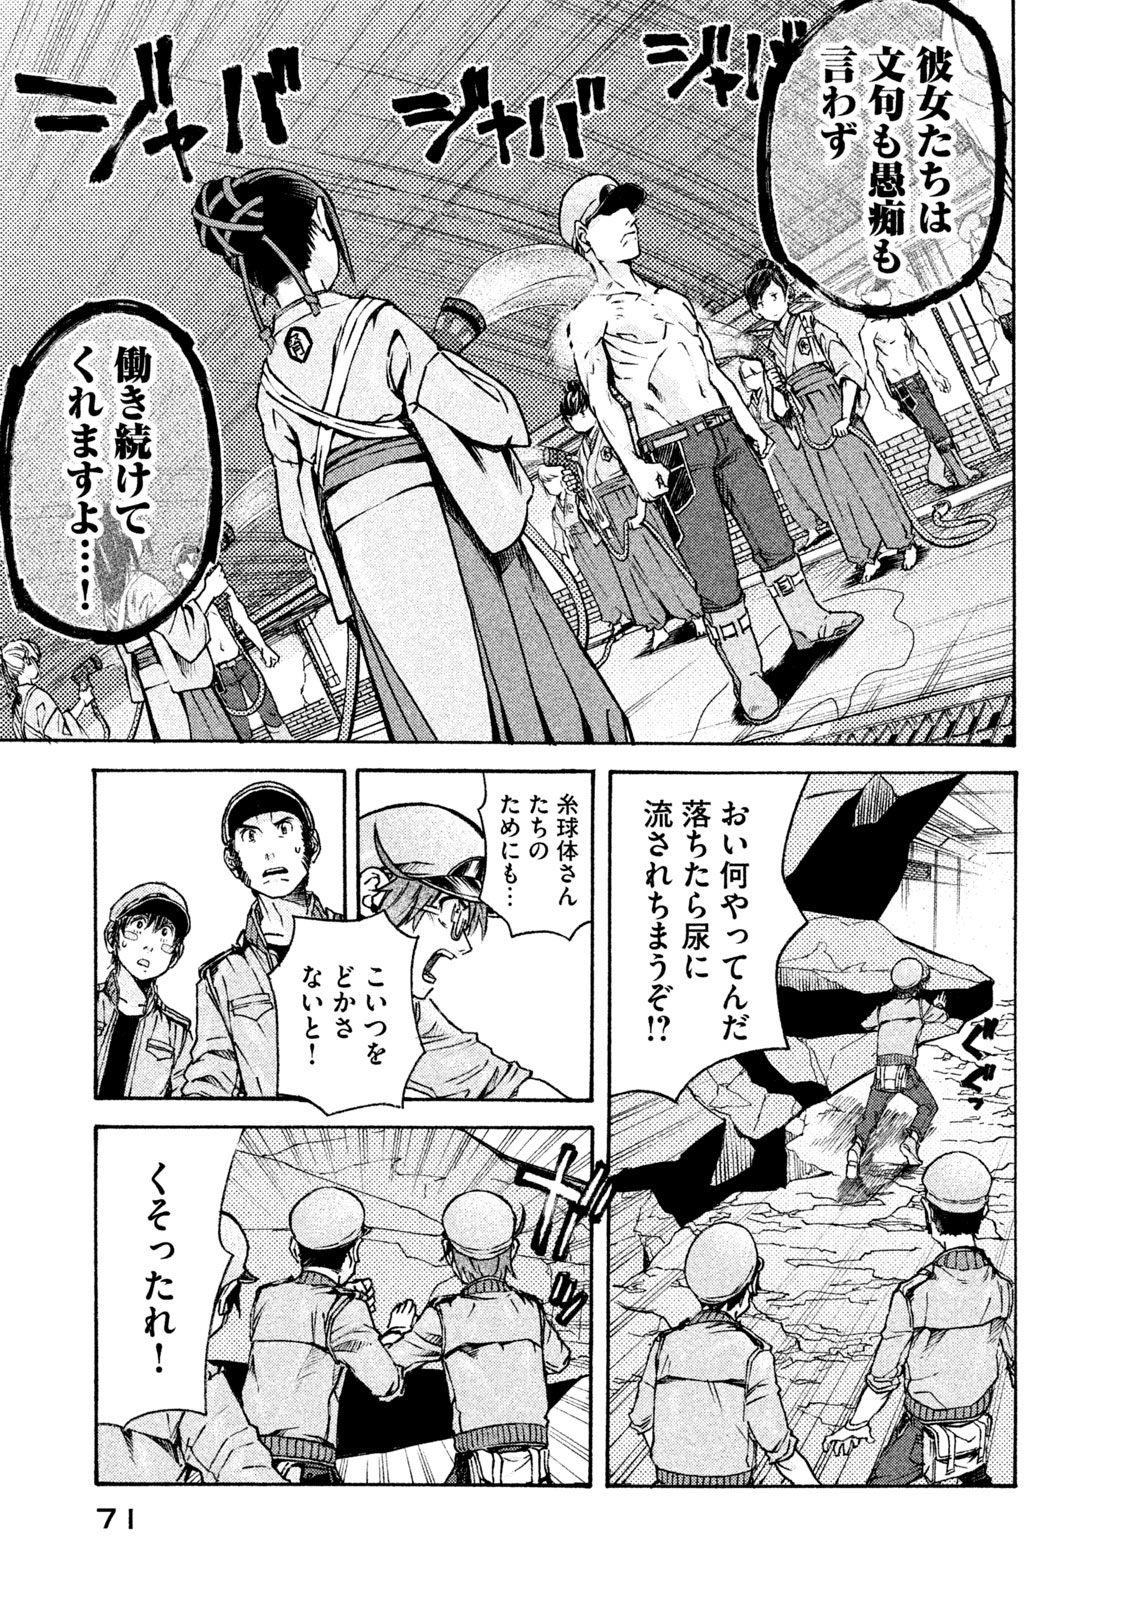 Hataraku Saibou BLACK - Chapter 13 - Page 15